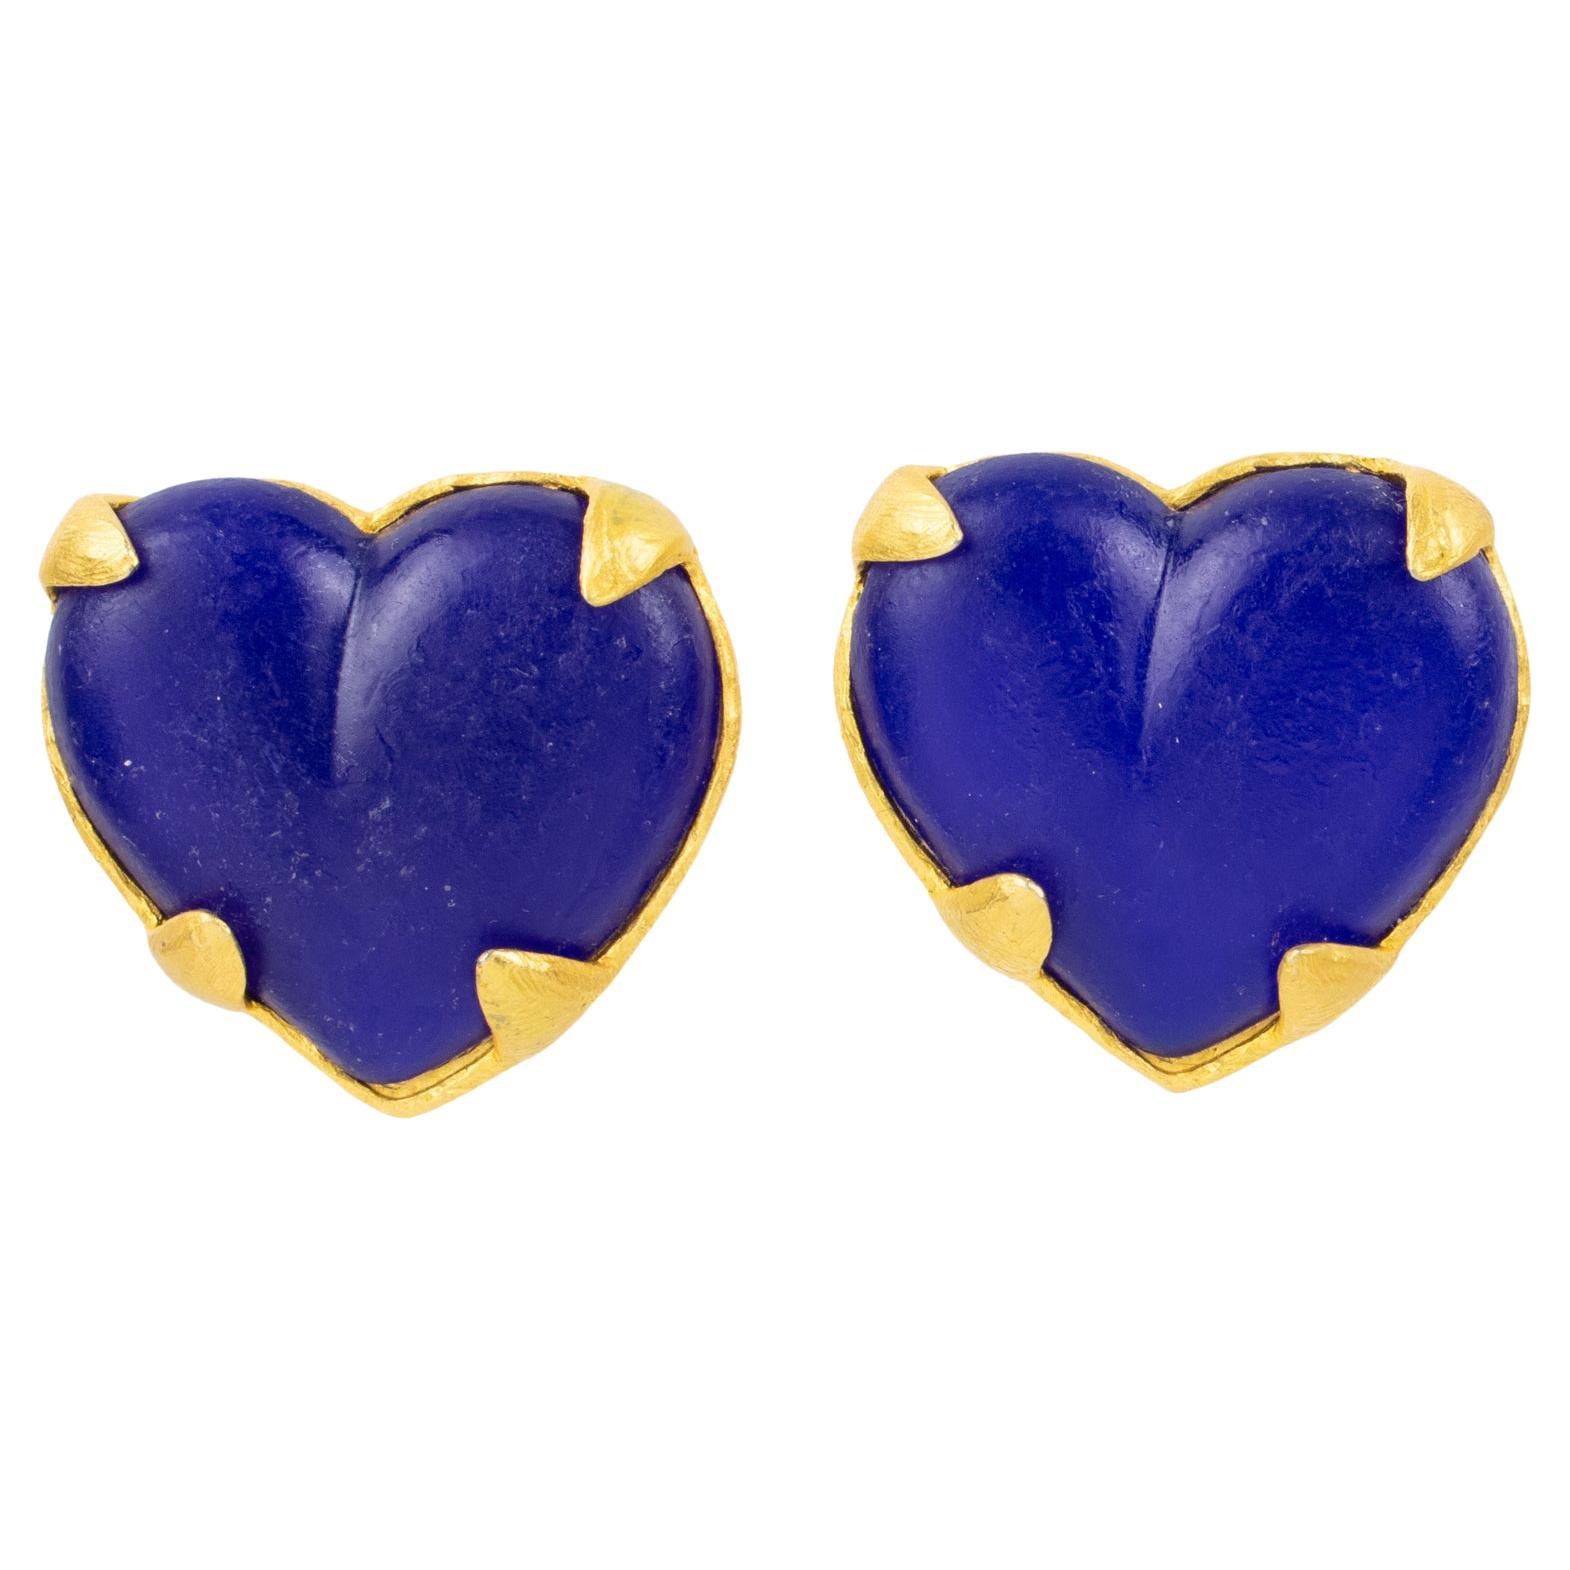 Edouard Rambaud Gilt Metal and Cobalt Blue Resin Heart Clip Earrings